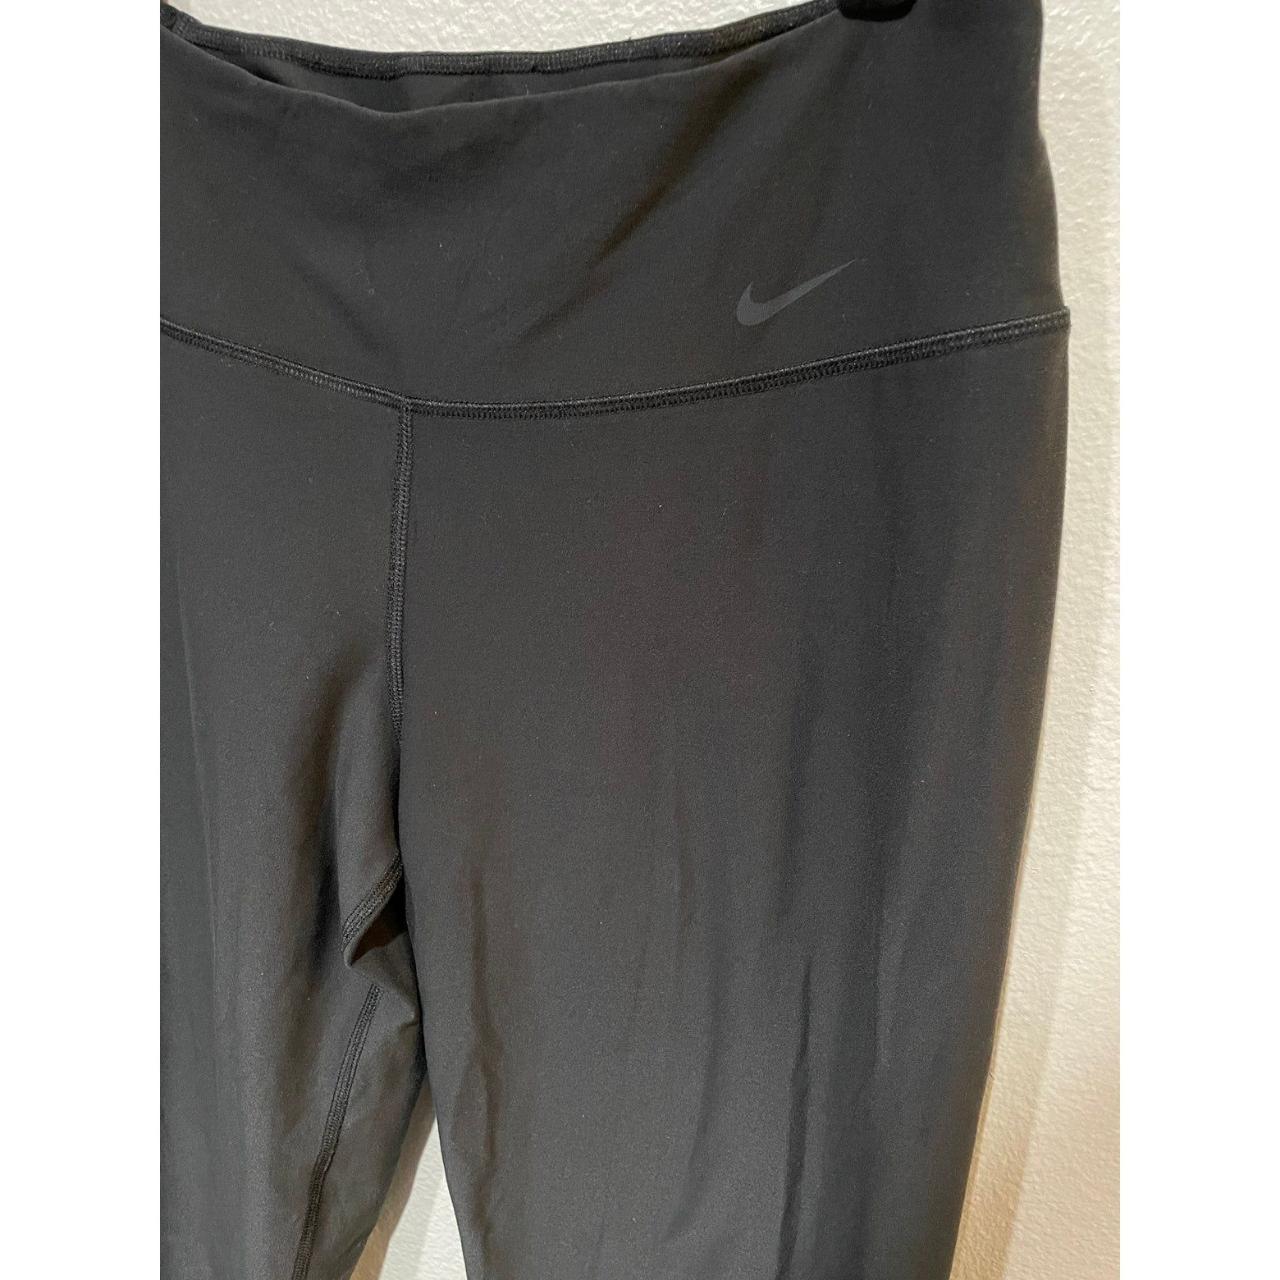 Nike Dri-Fit M Active Pants Women's size medium. - Depop